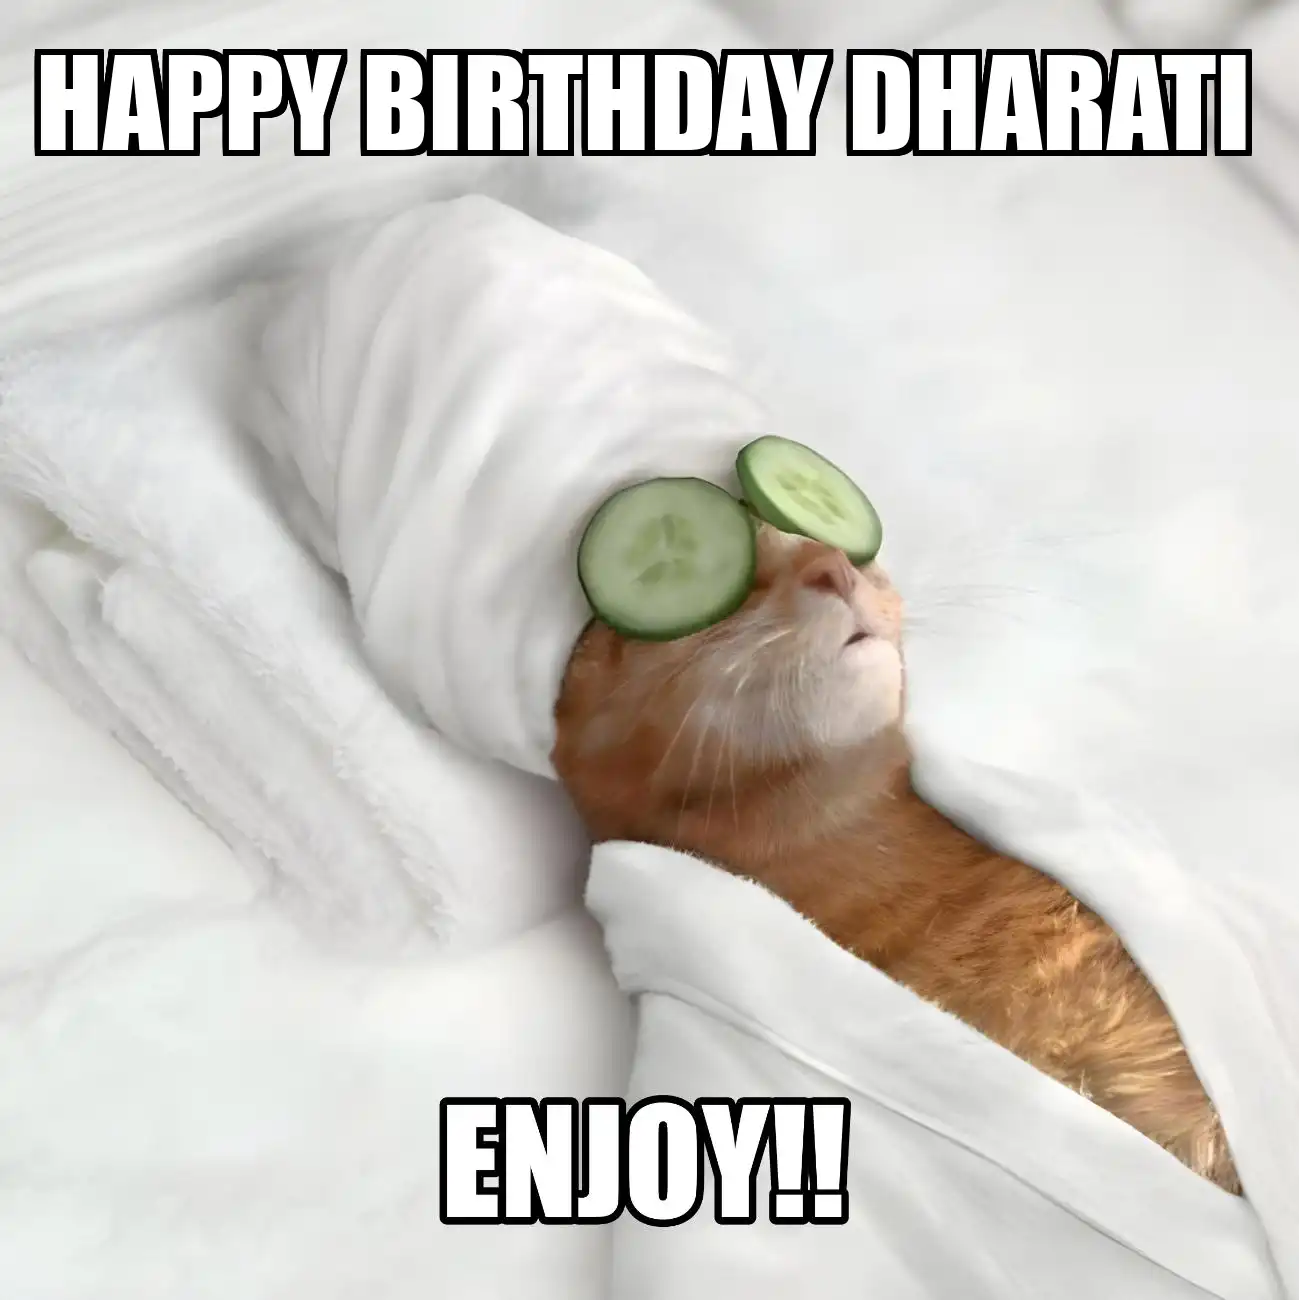 Happy Birthday Dharati Enjoy Cat Meme